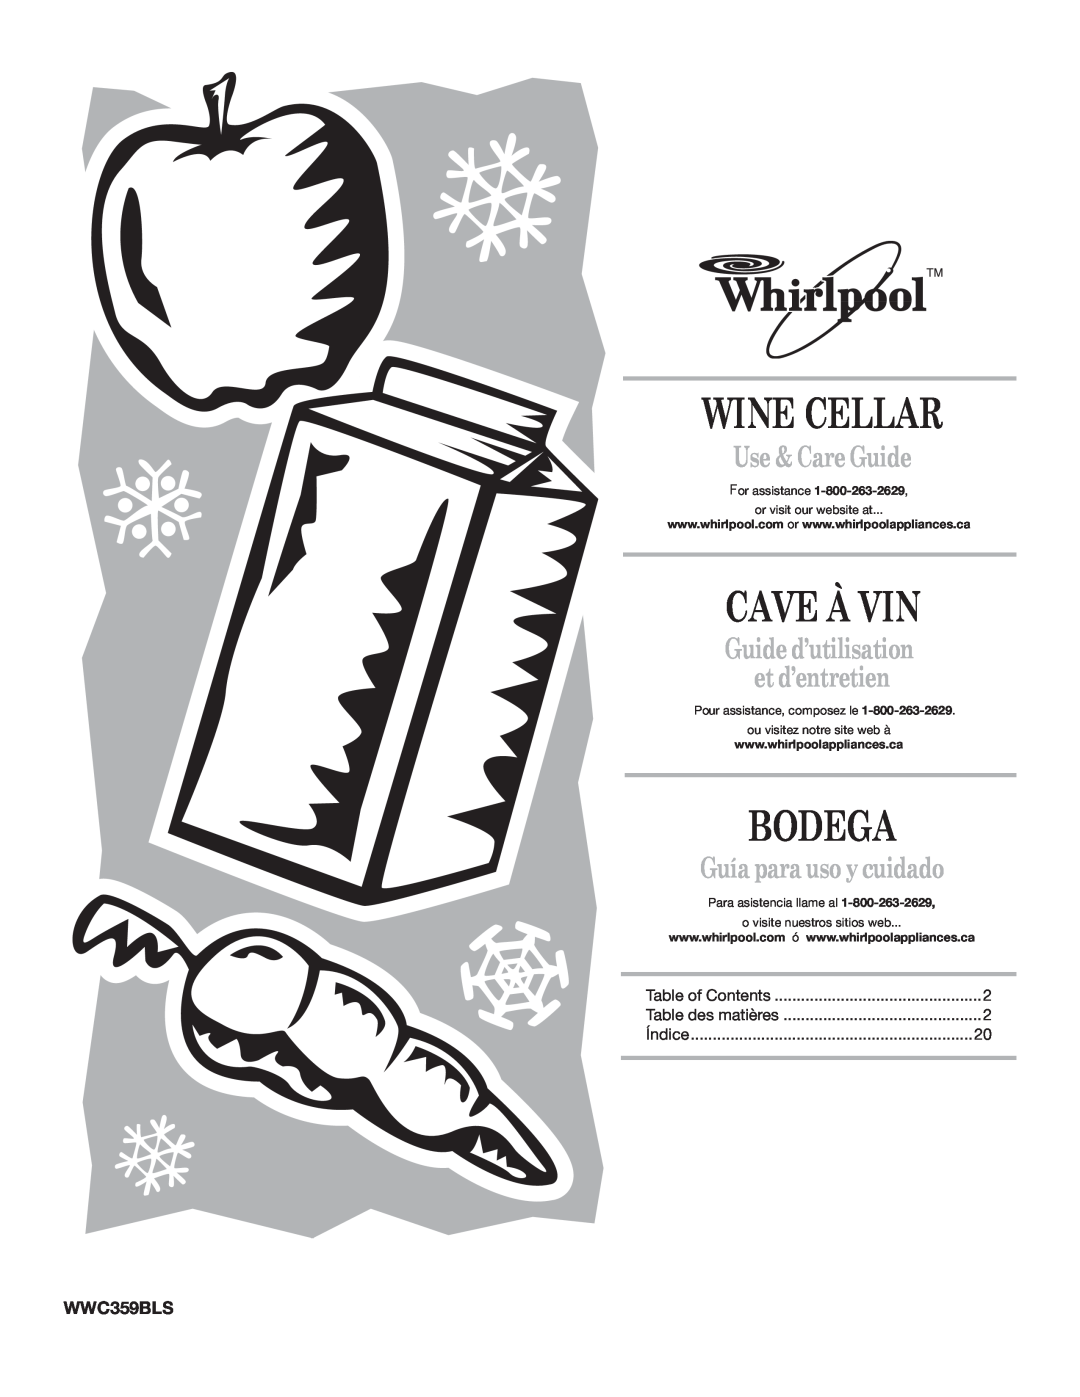 Whirlpool WWC359BLS manual Wine Cellar, Cave À Vin, Bodega, Use&CareGuide, Guíaparausoycuidado, Para asistencia llame al 